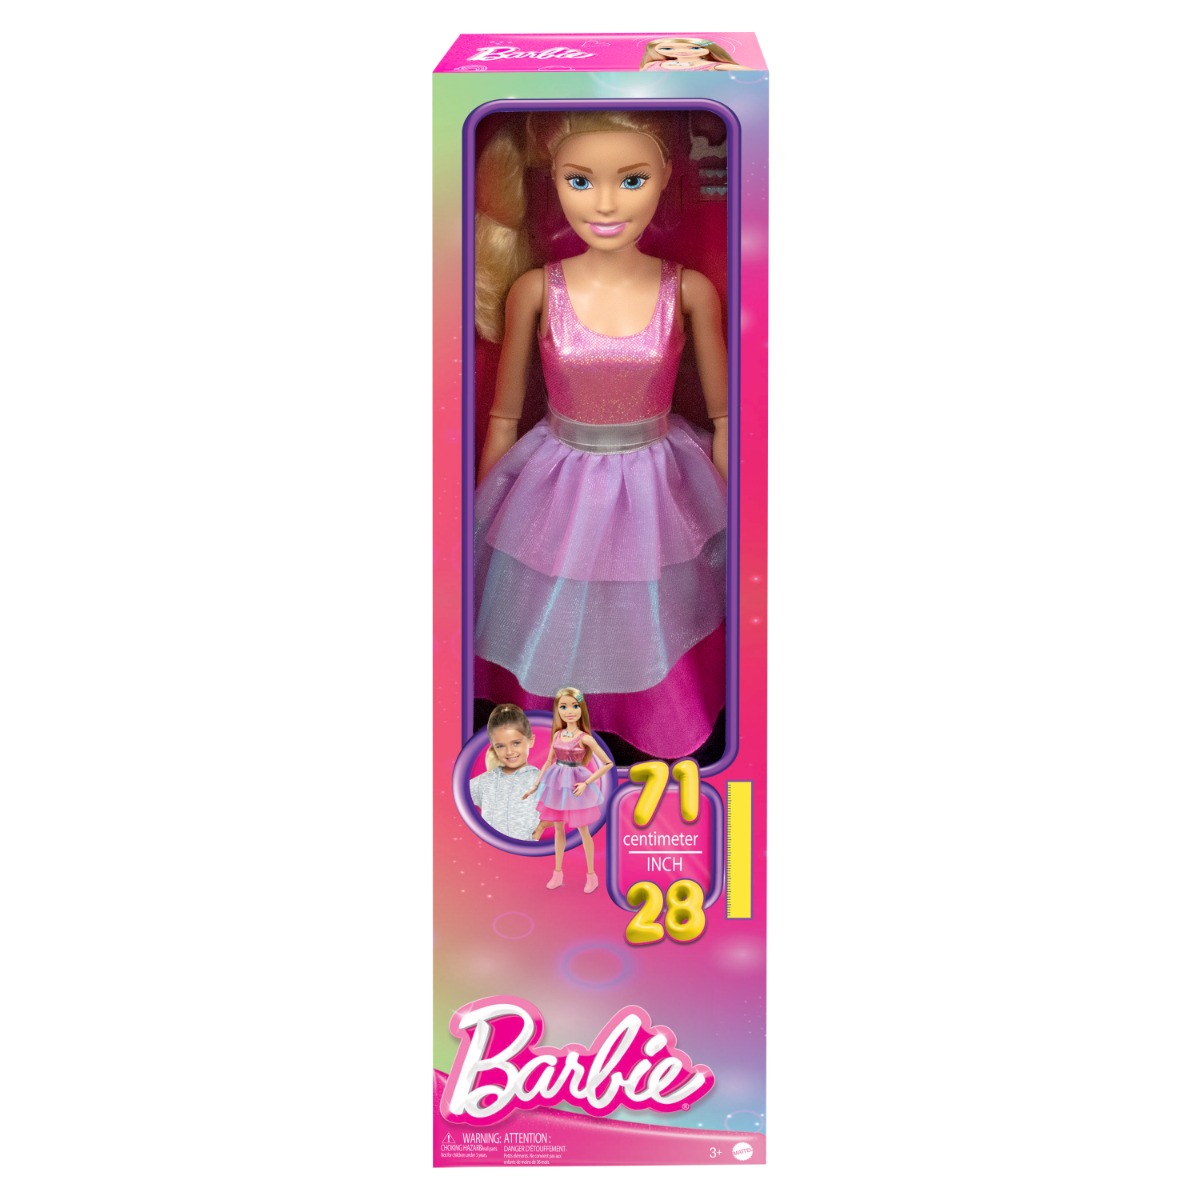 Papusa in tinuta roz, Barbie, 71 cm, HJY02